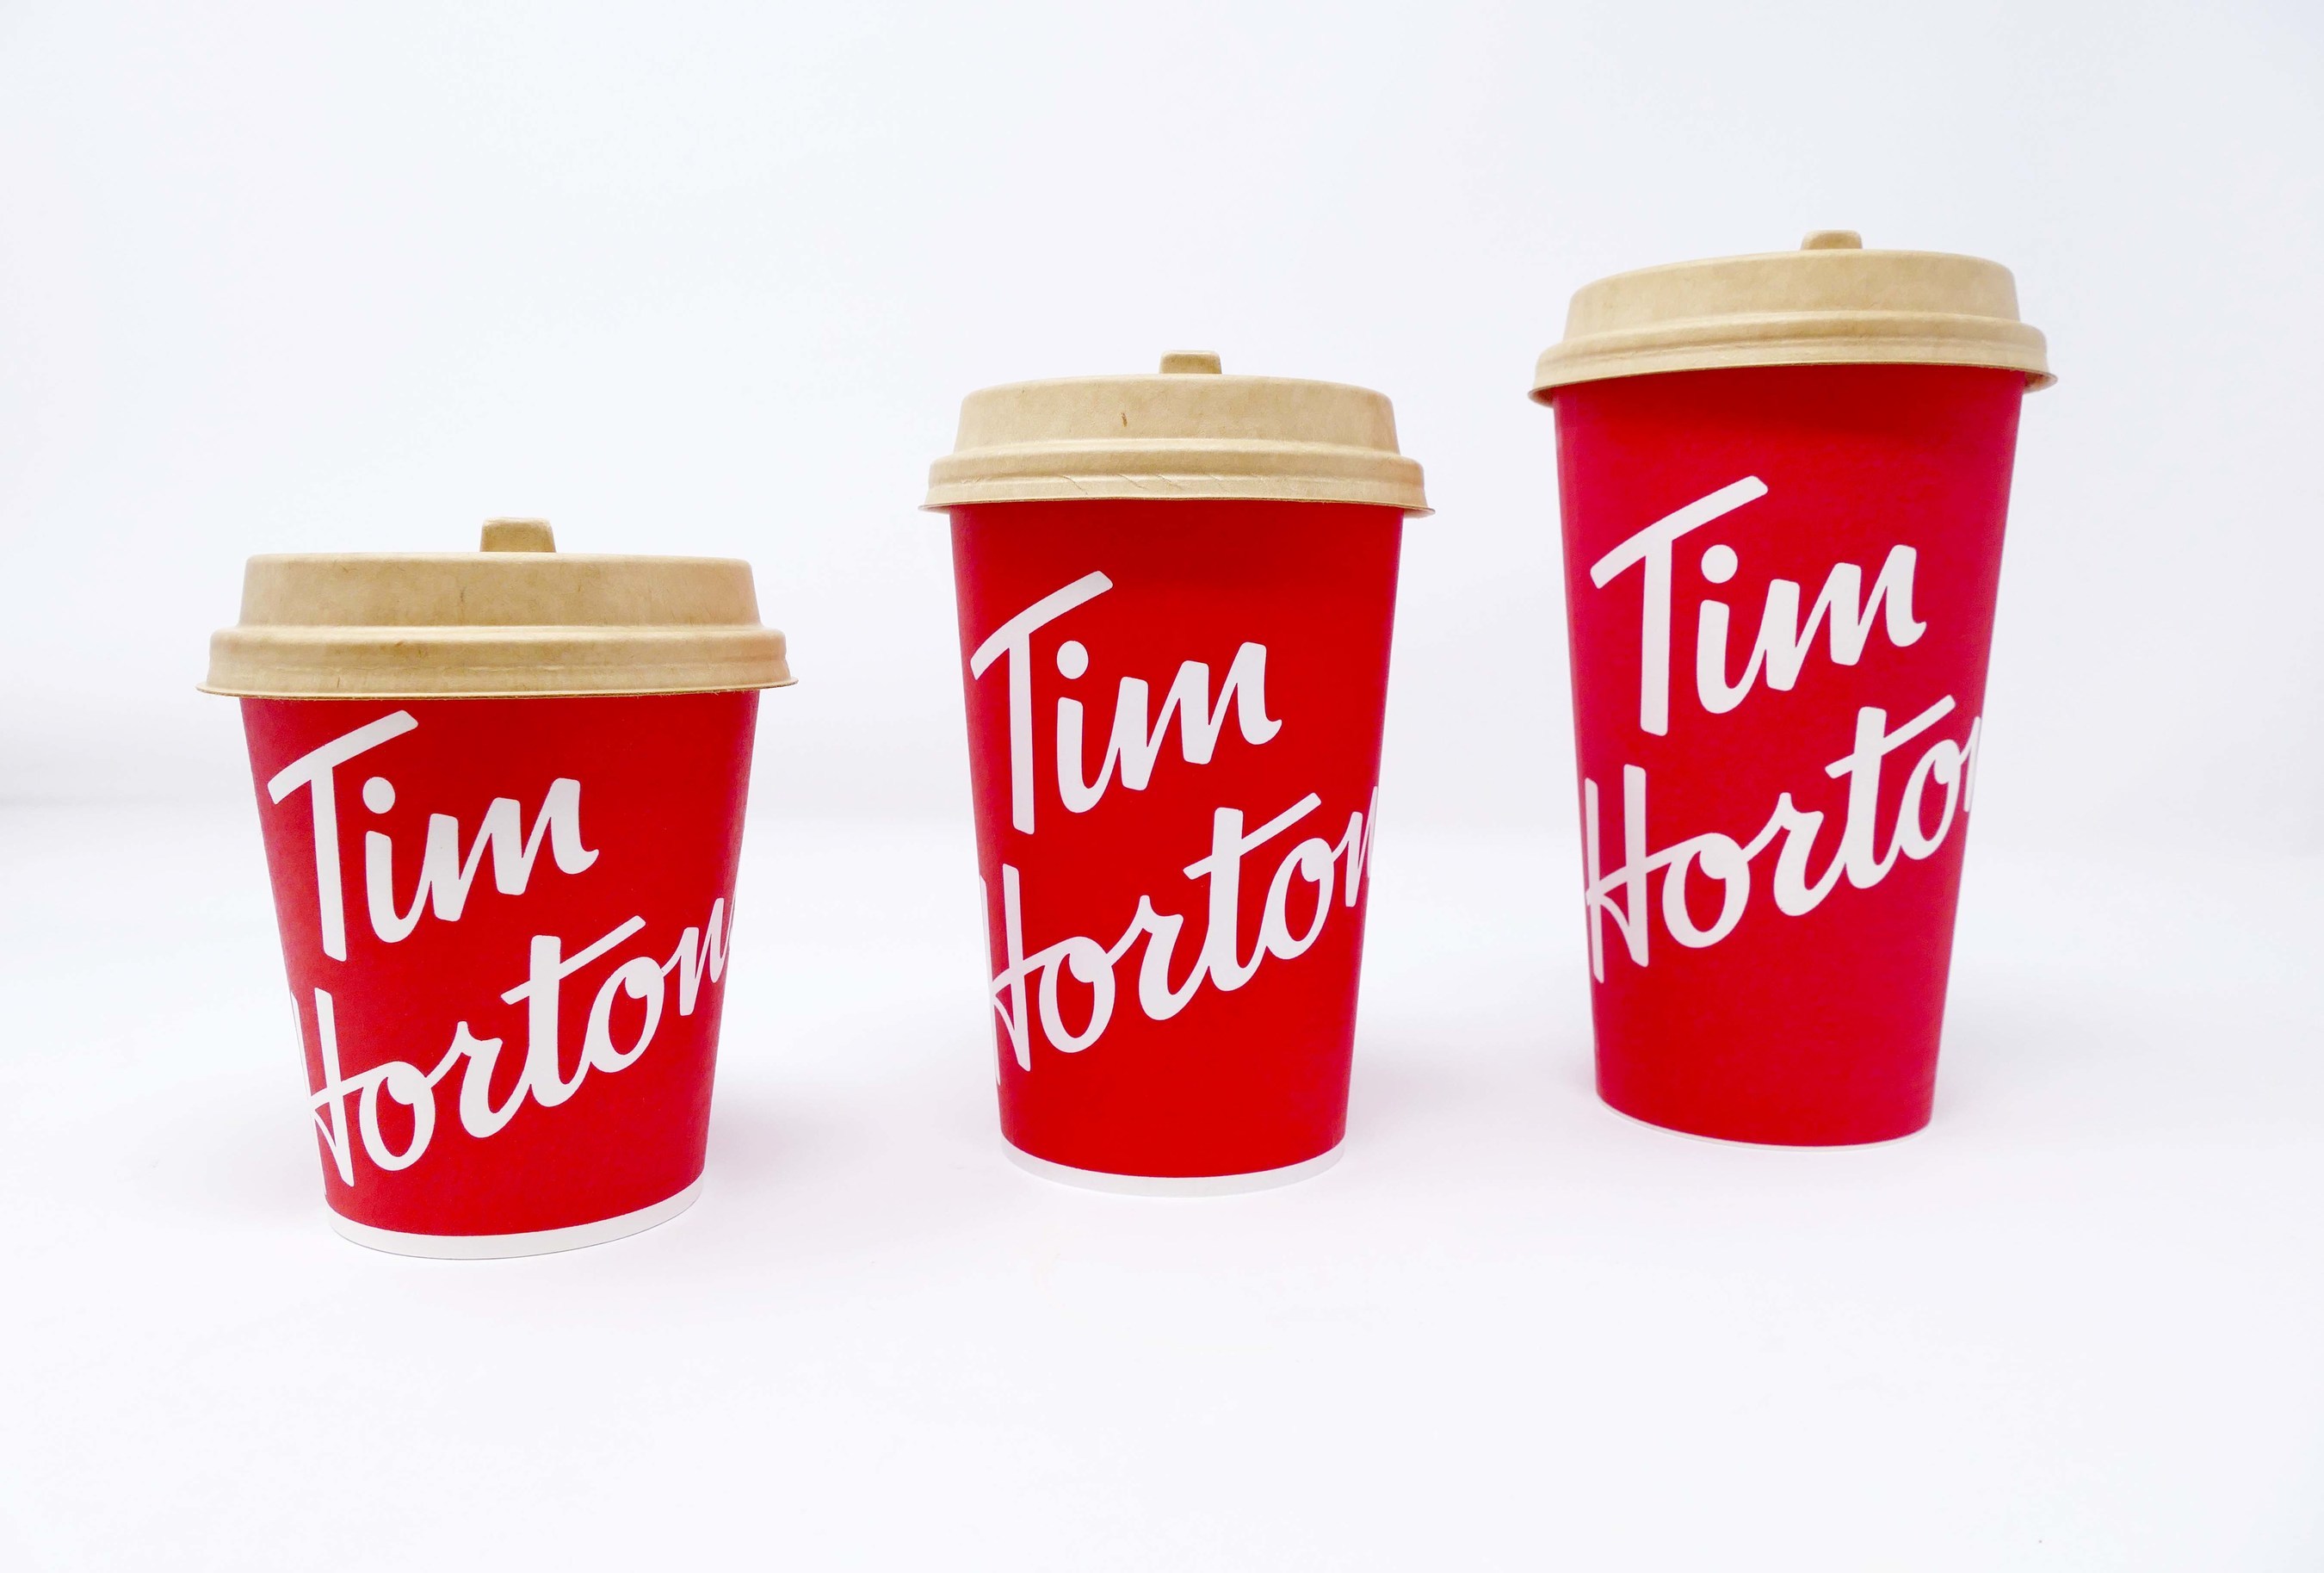 Each Canadian city prefer different Tim Hortons menu items